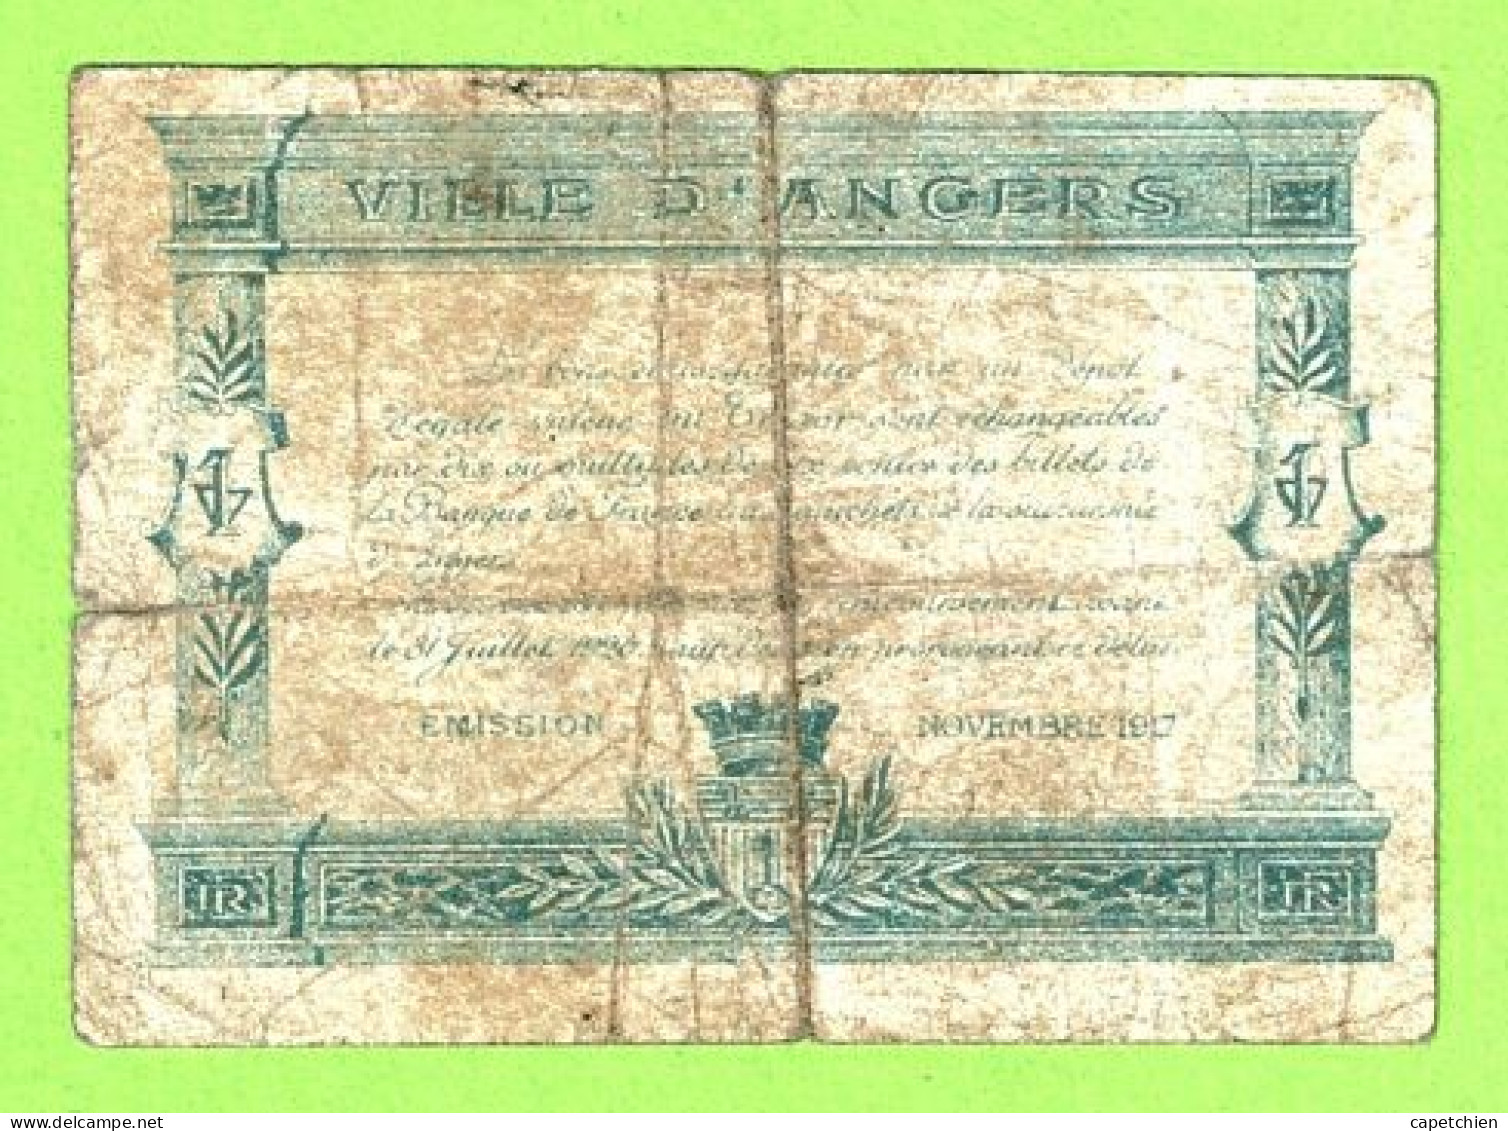 FRANCE / ANGERS / CHAMBRE DE COMMERCE / 25 CENT / NOVEMBRE 1917 - Handelskammer